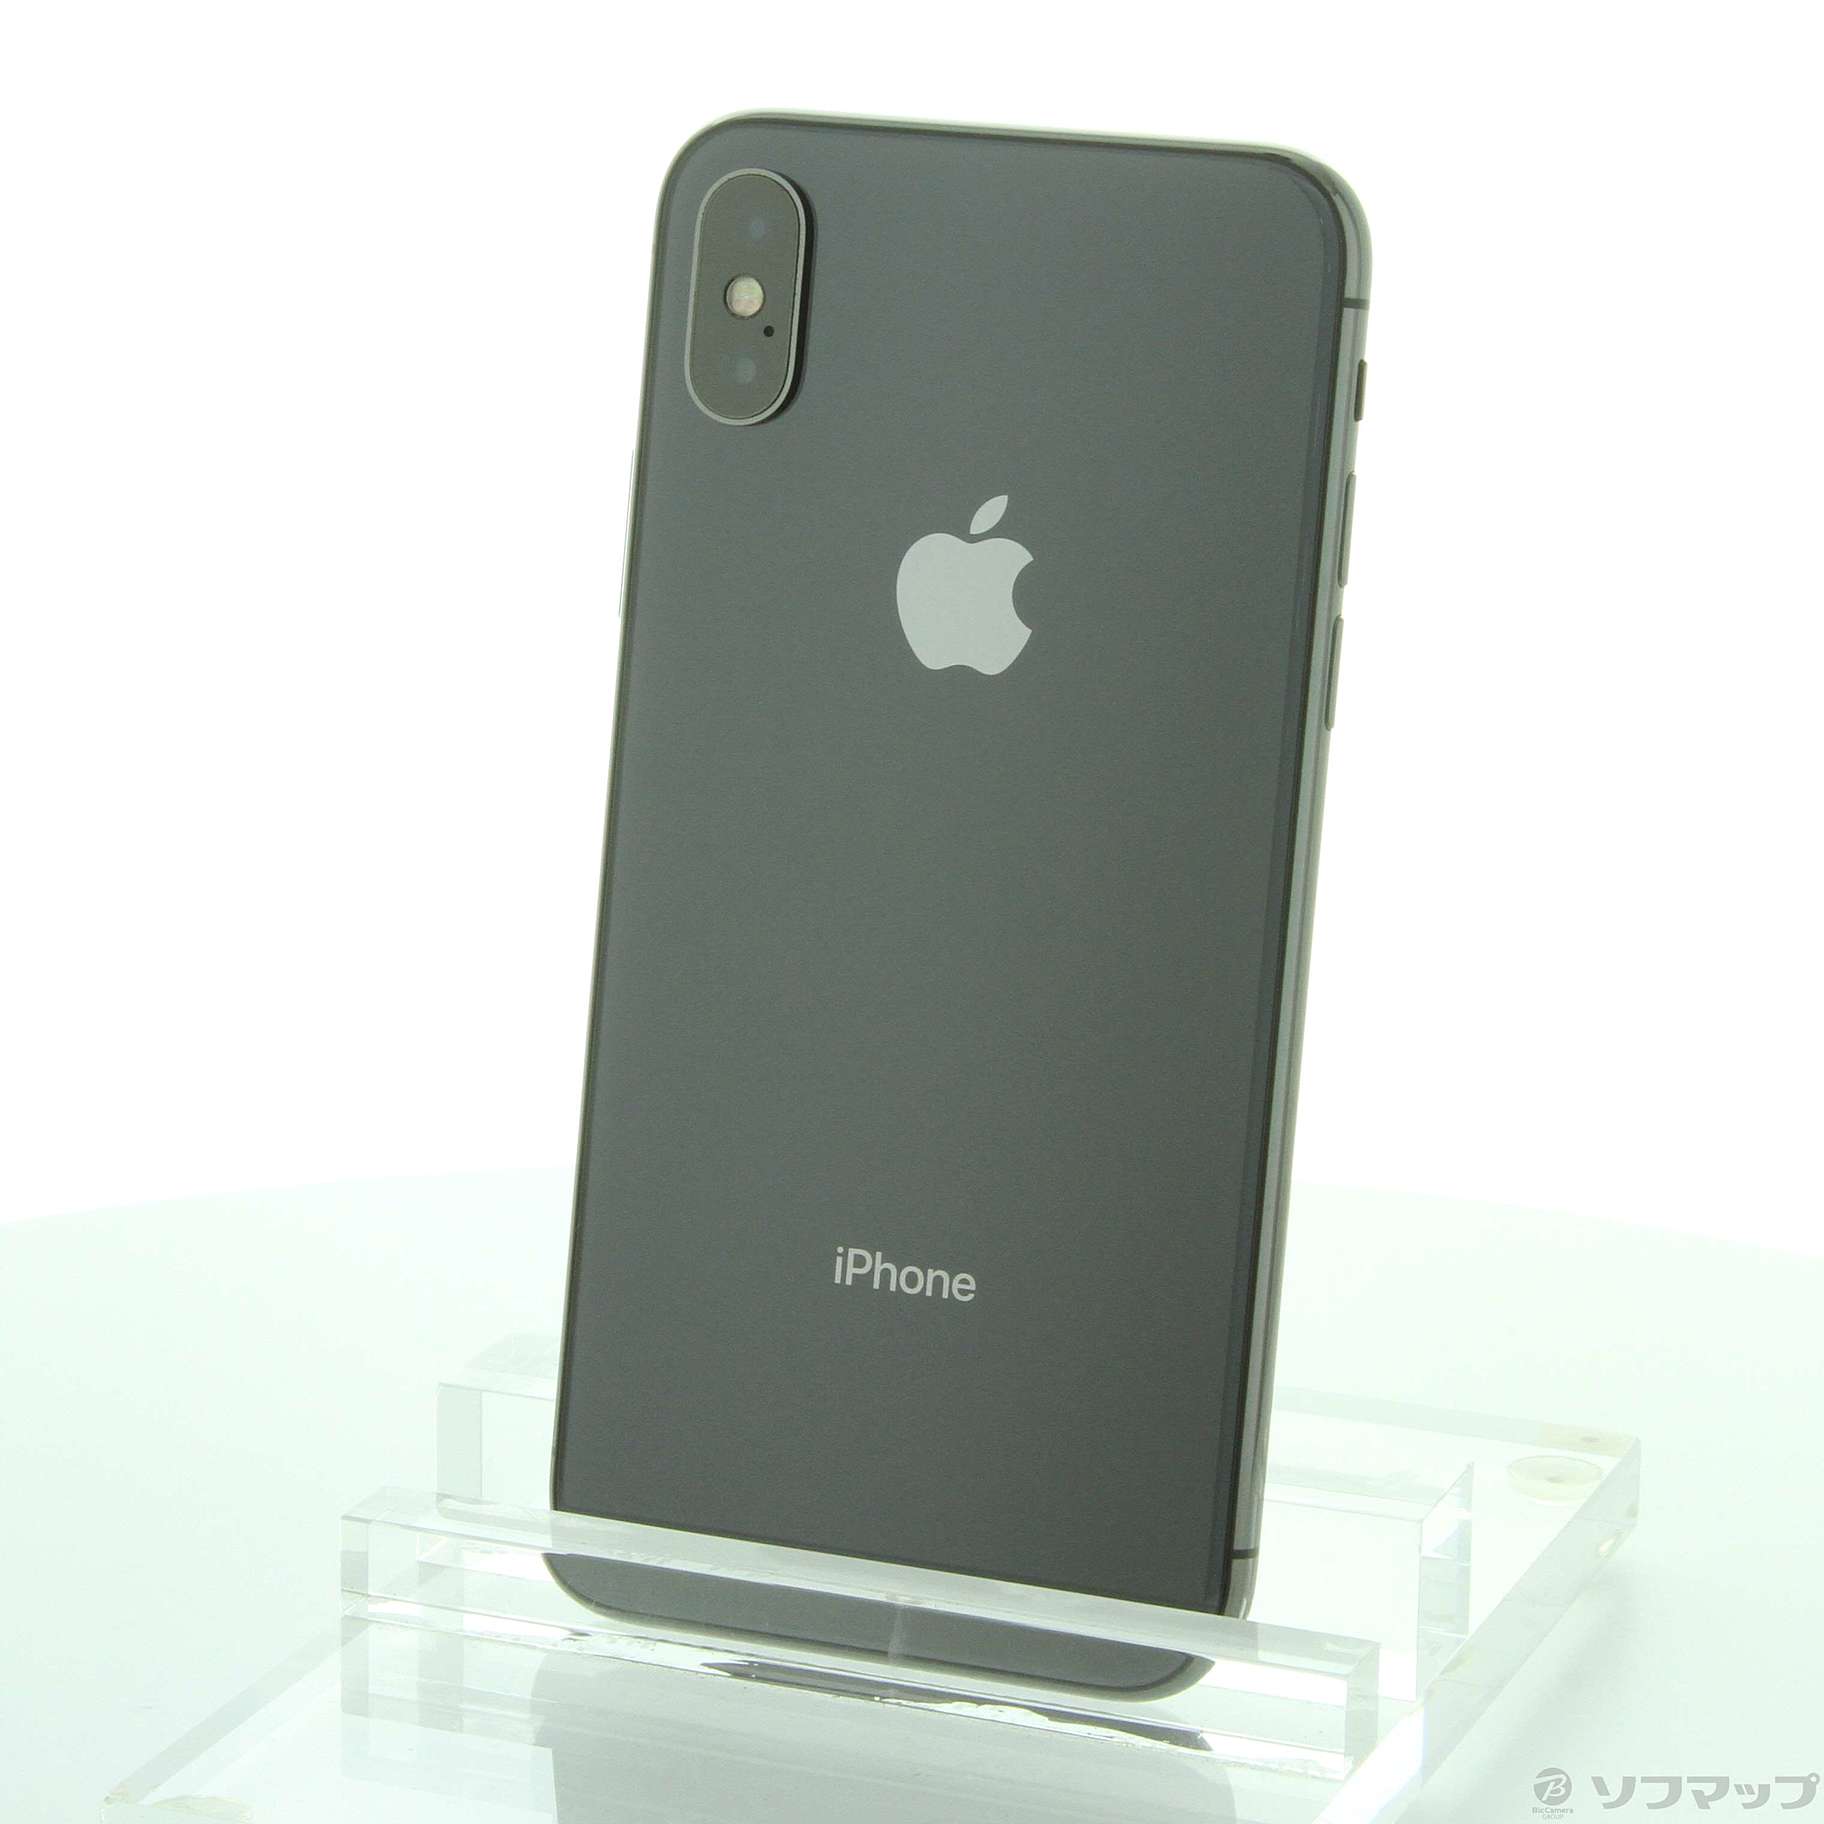 iPhoneX 256GB SIMフリー スペースグレースマートフォン本体 